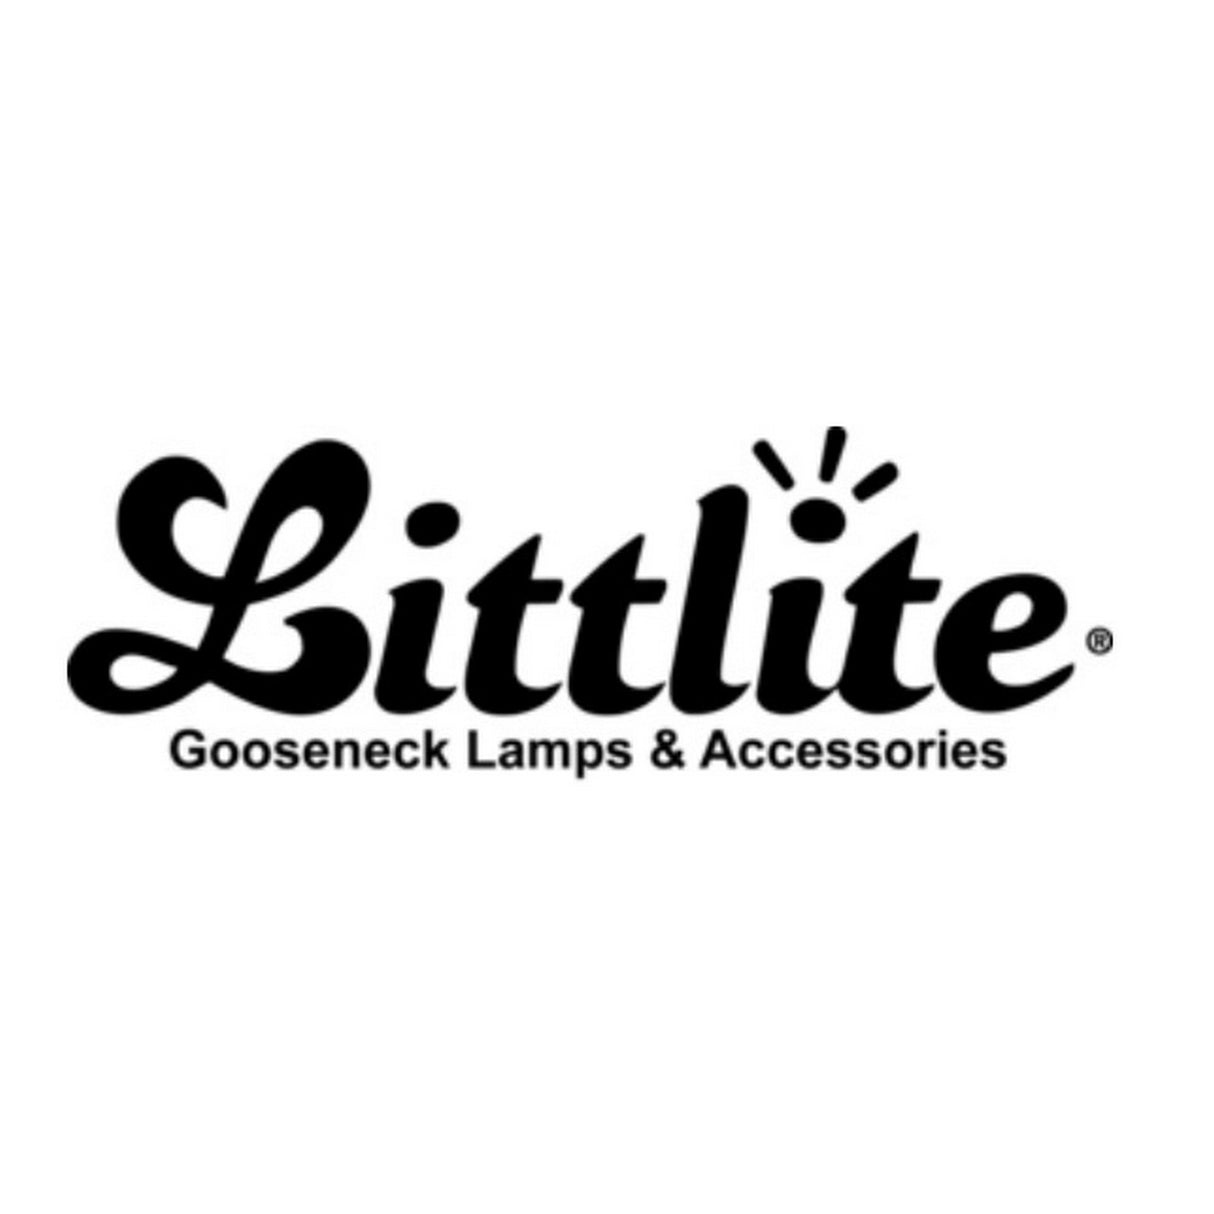 Littlite L-7/12A-LED | 12 Inch End Mount Gooseneck LED Lampset Light with Power Supply Delete